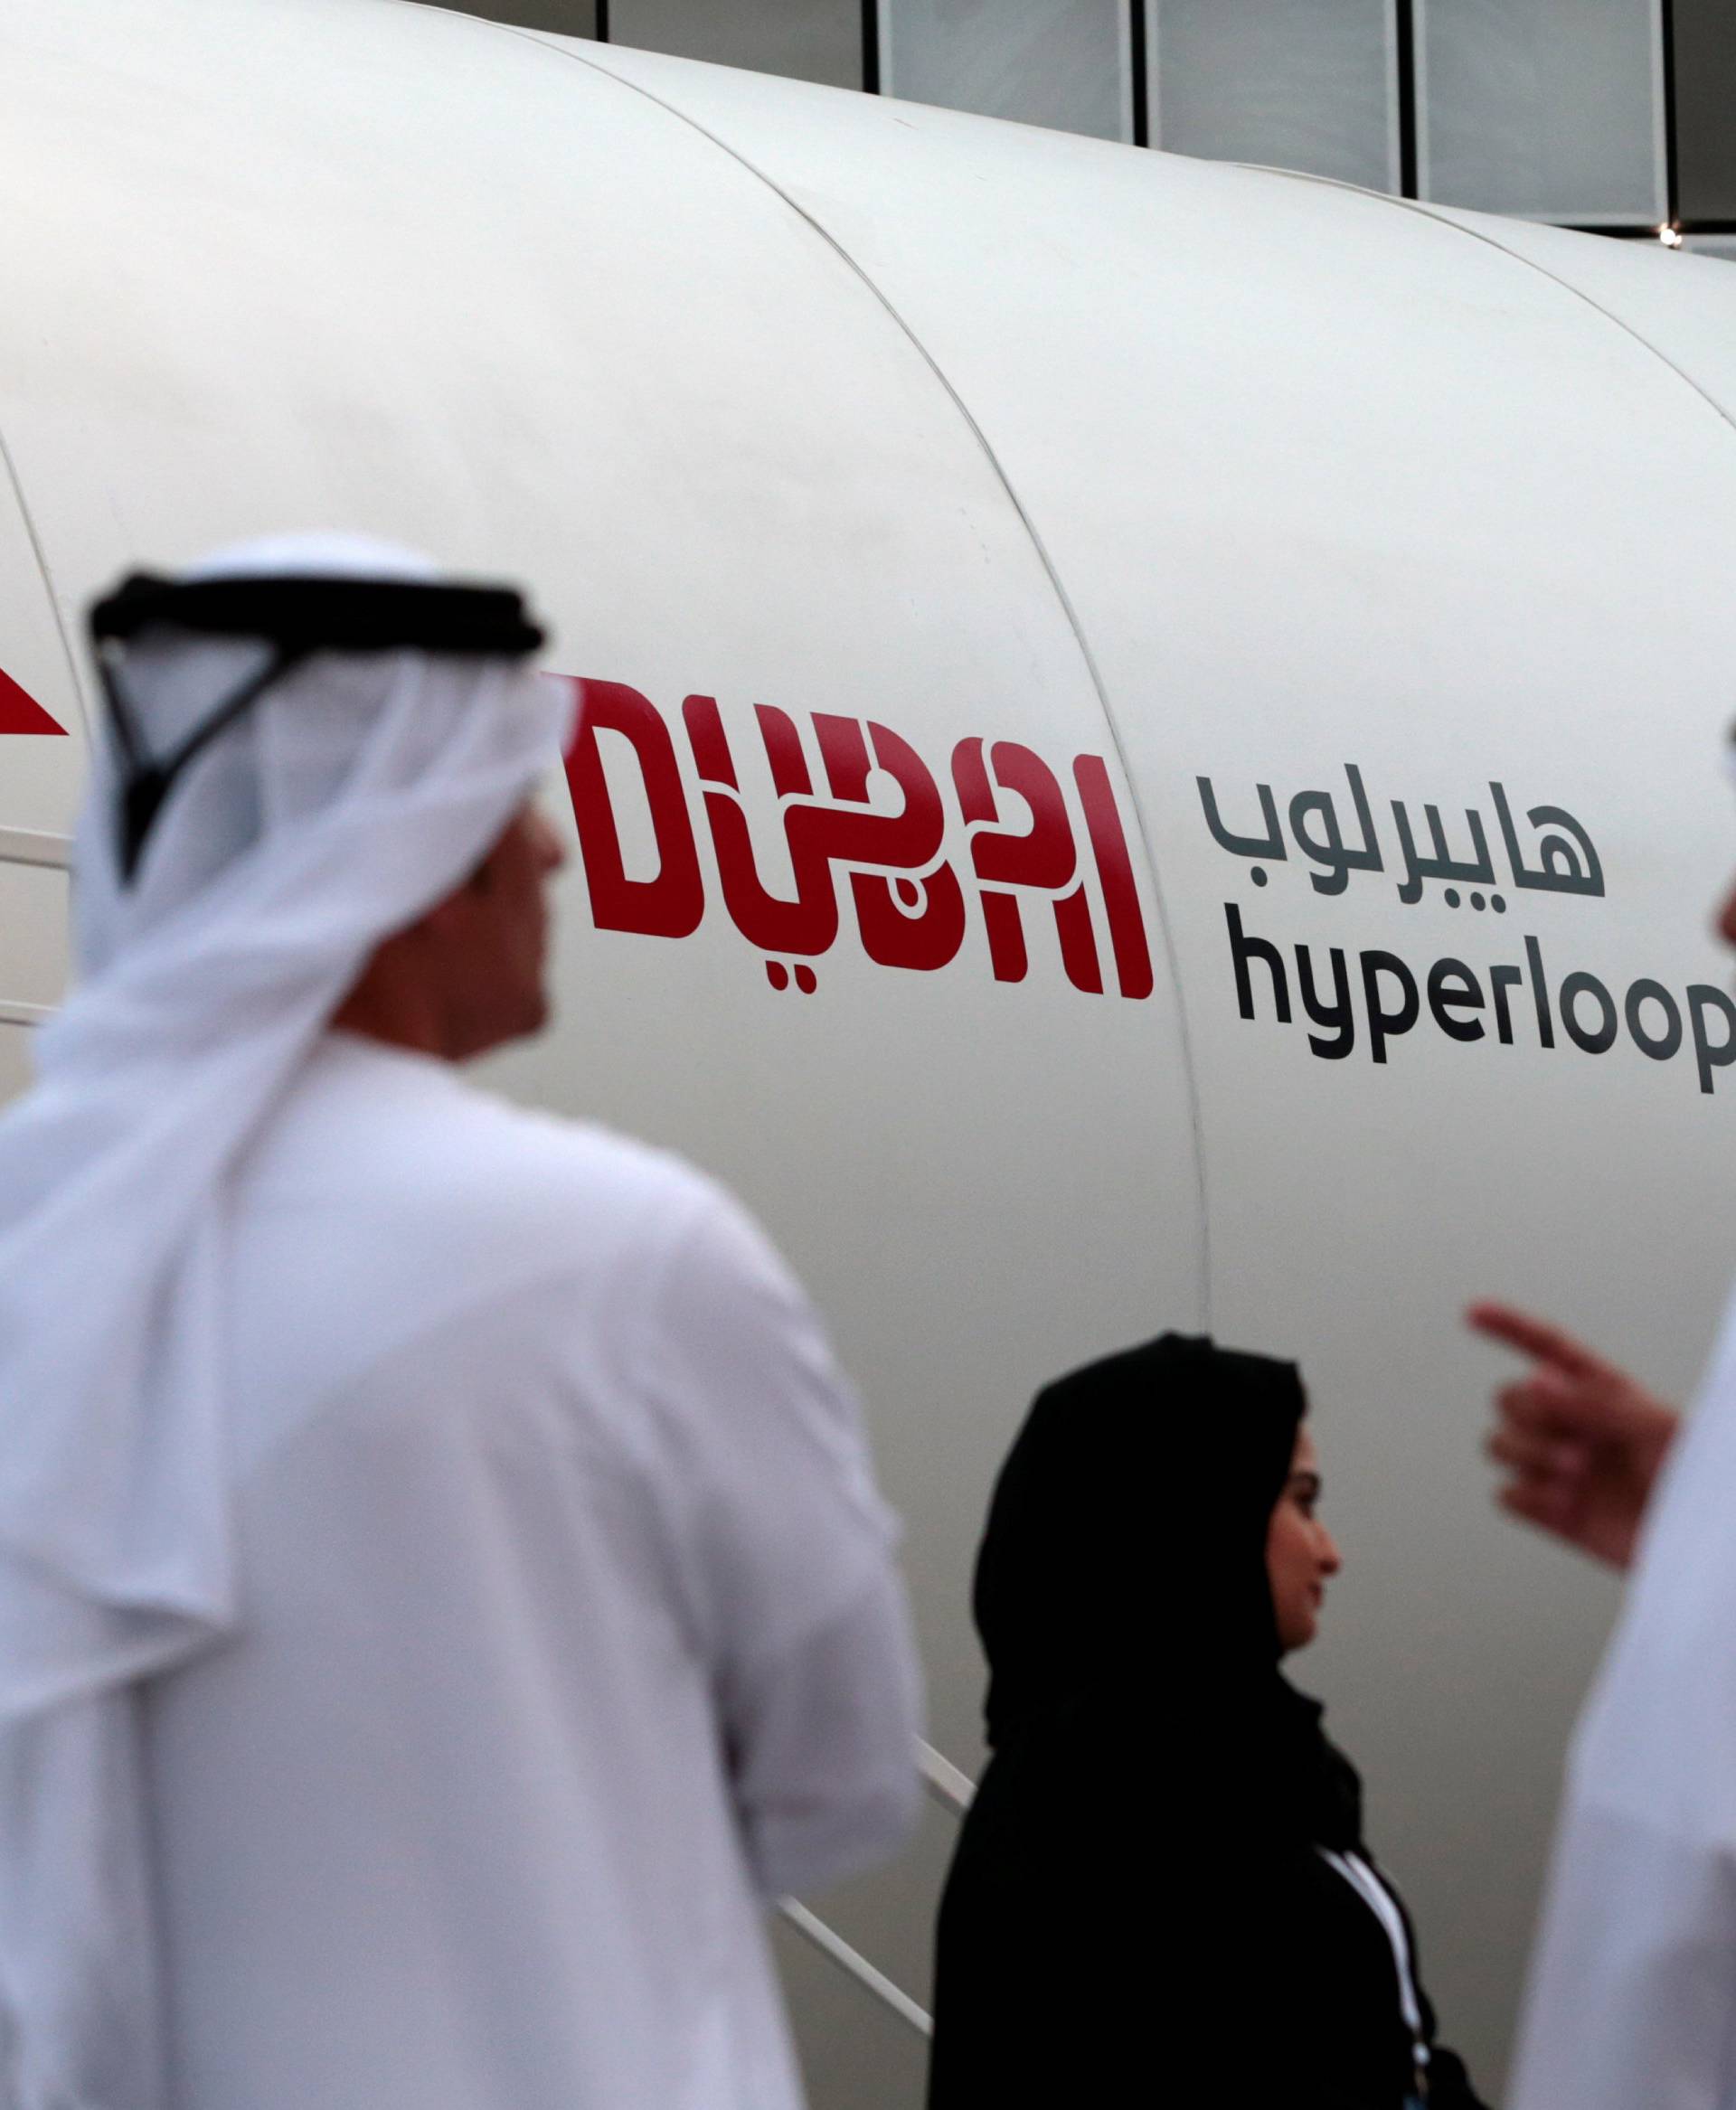 RTA unveil the design model of the hyperloop in Dubai